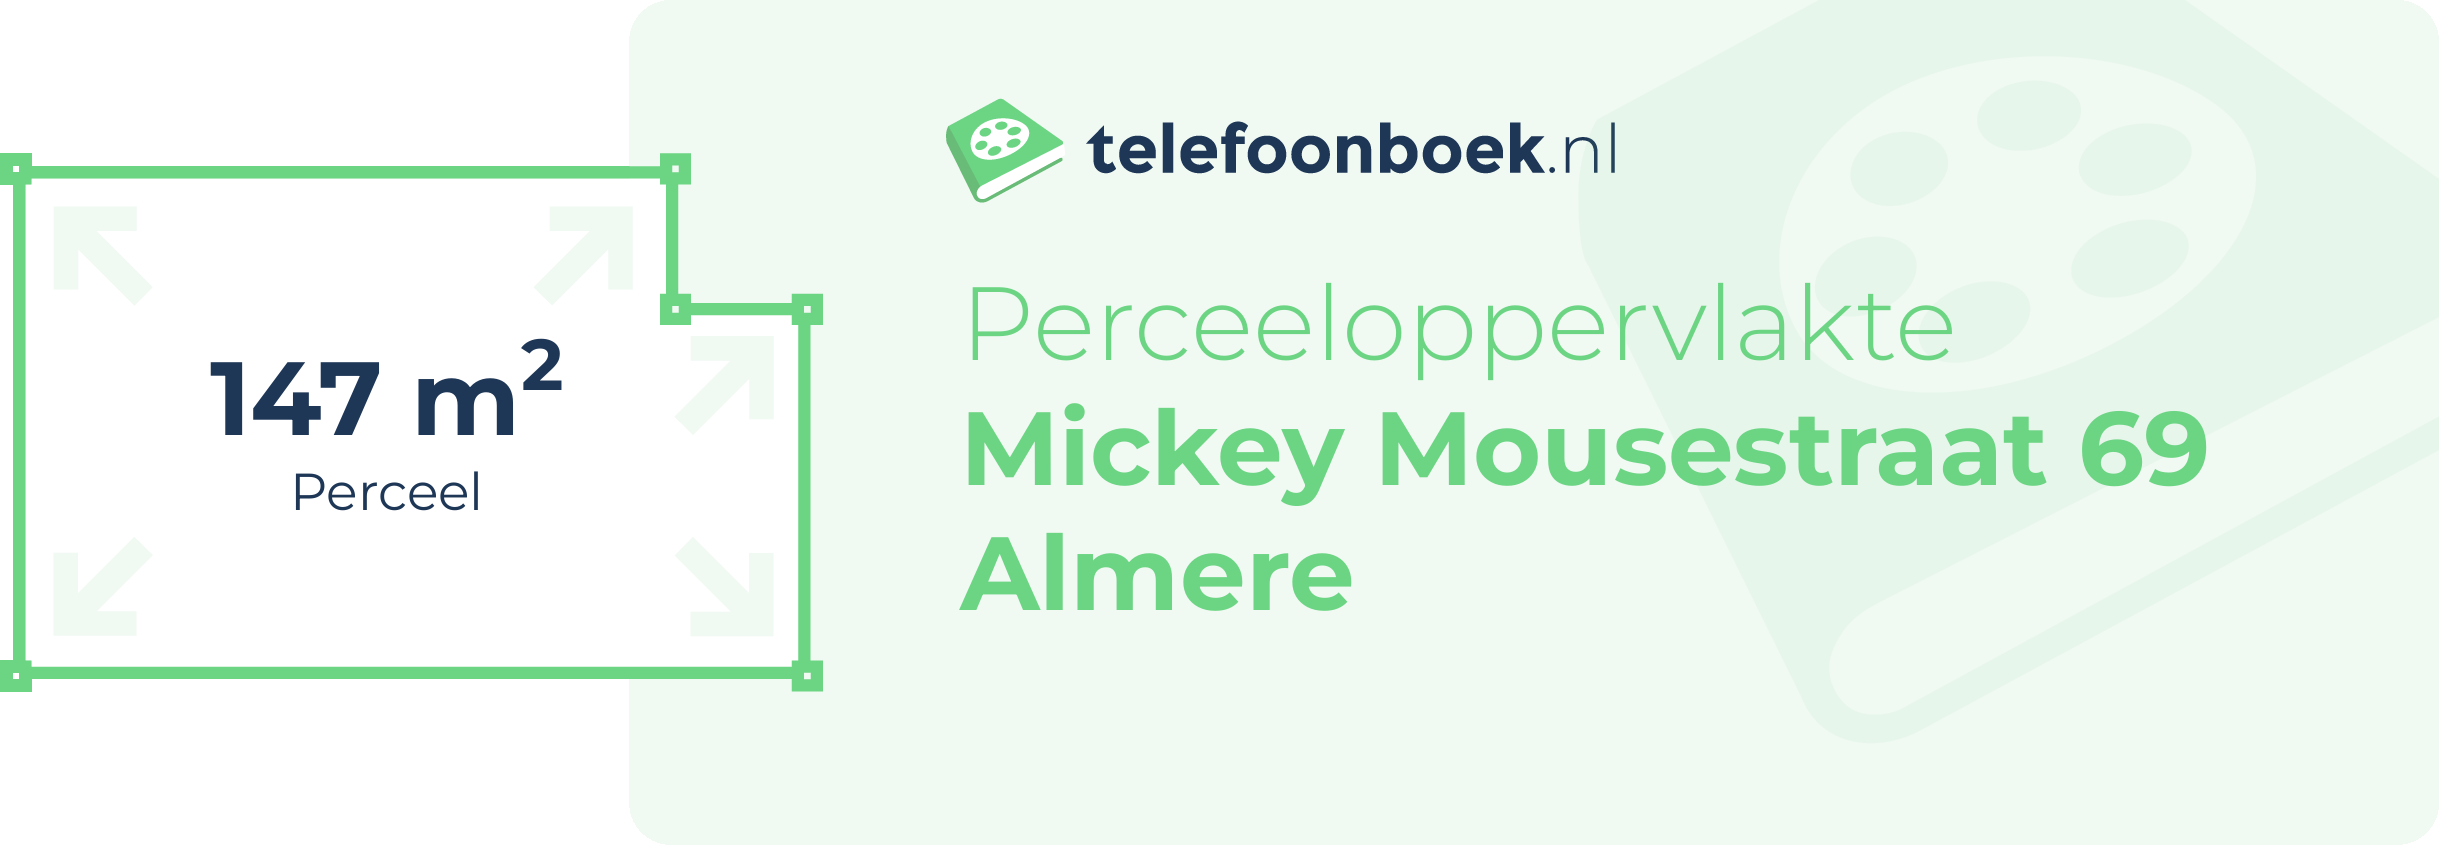 Perceeloppervlakte Mickey Mousestraat 69 Almere